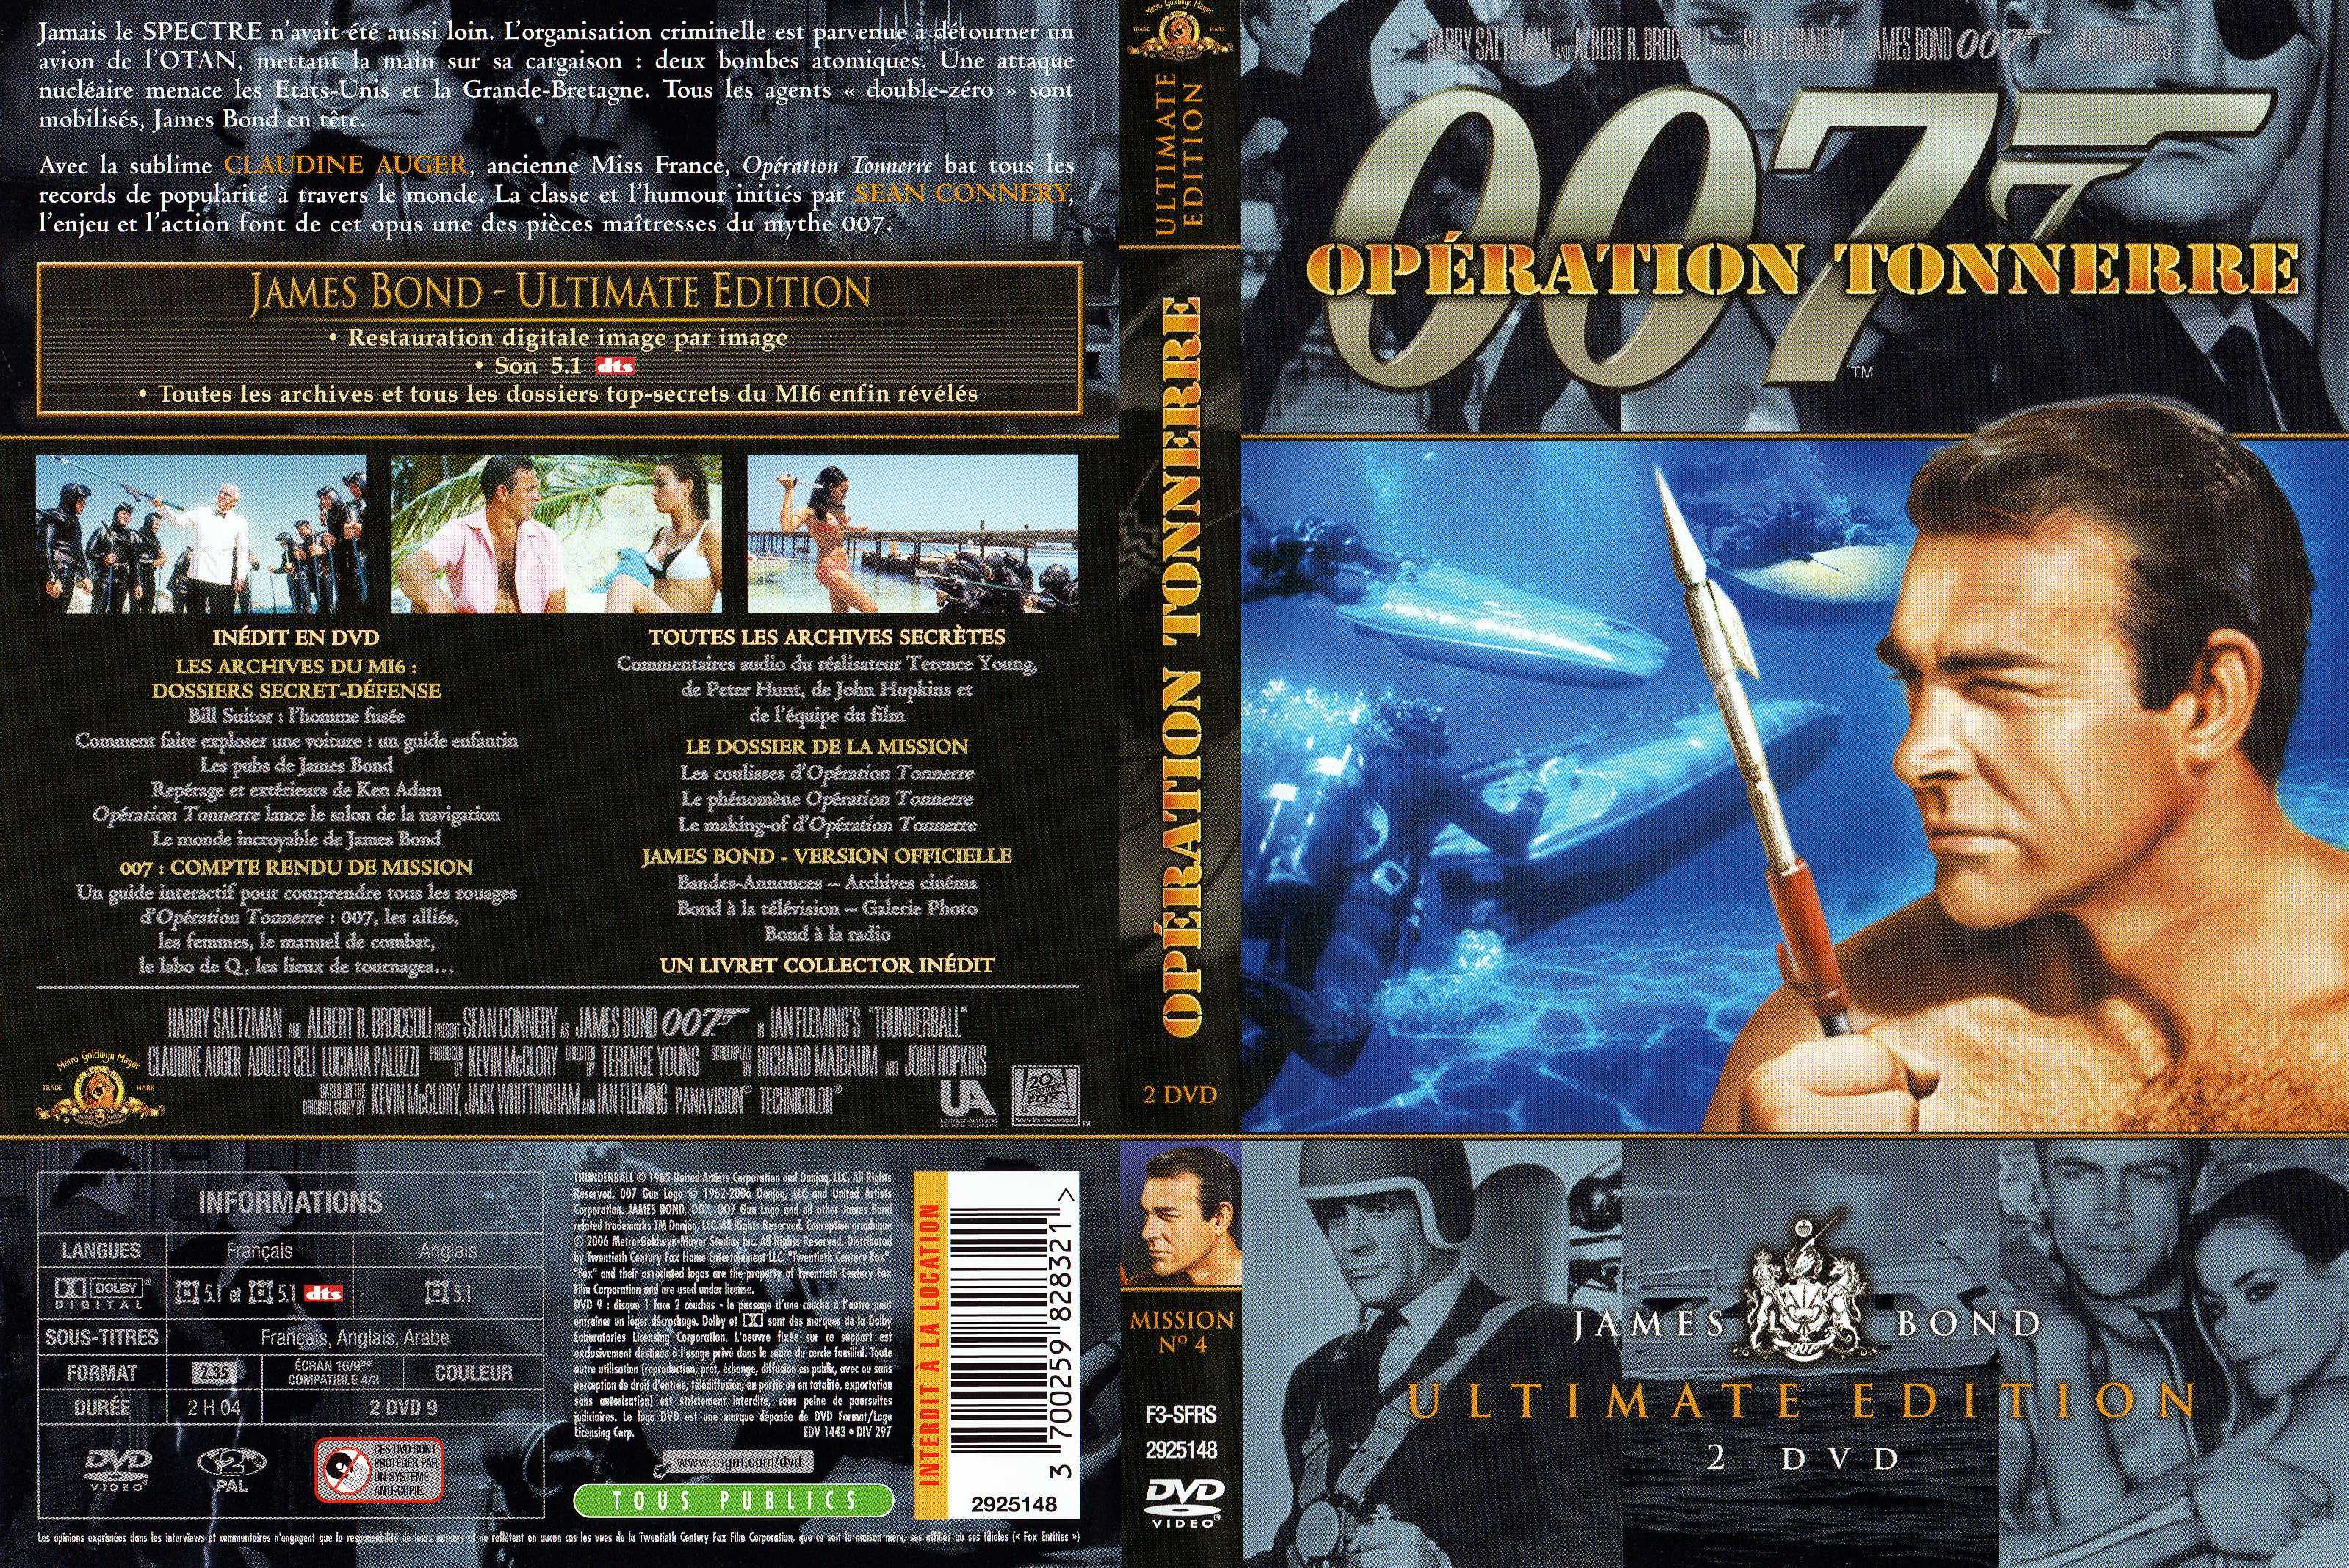 Jaquette DVD James Bond 007 Opration tonnerre Ultimate Edition